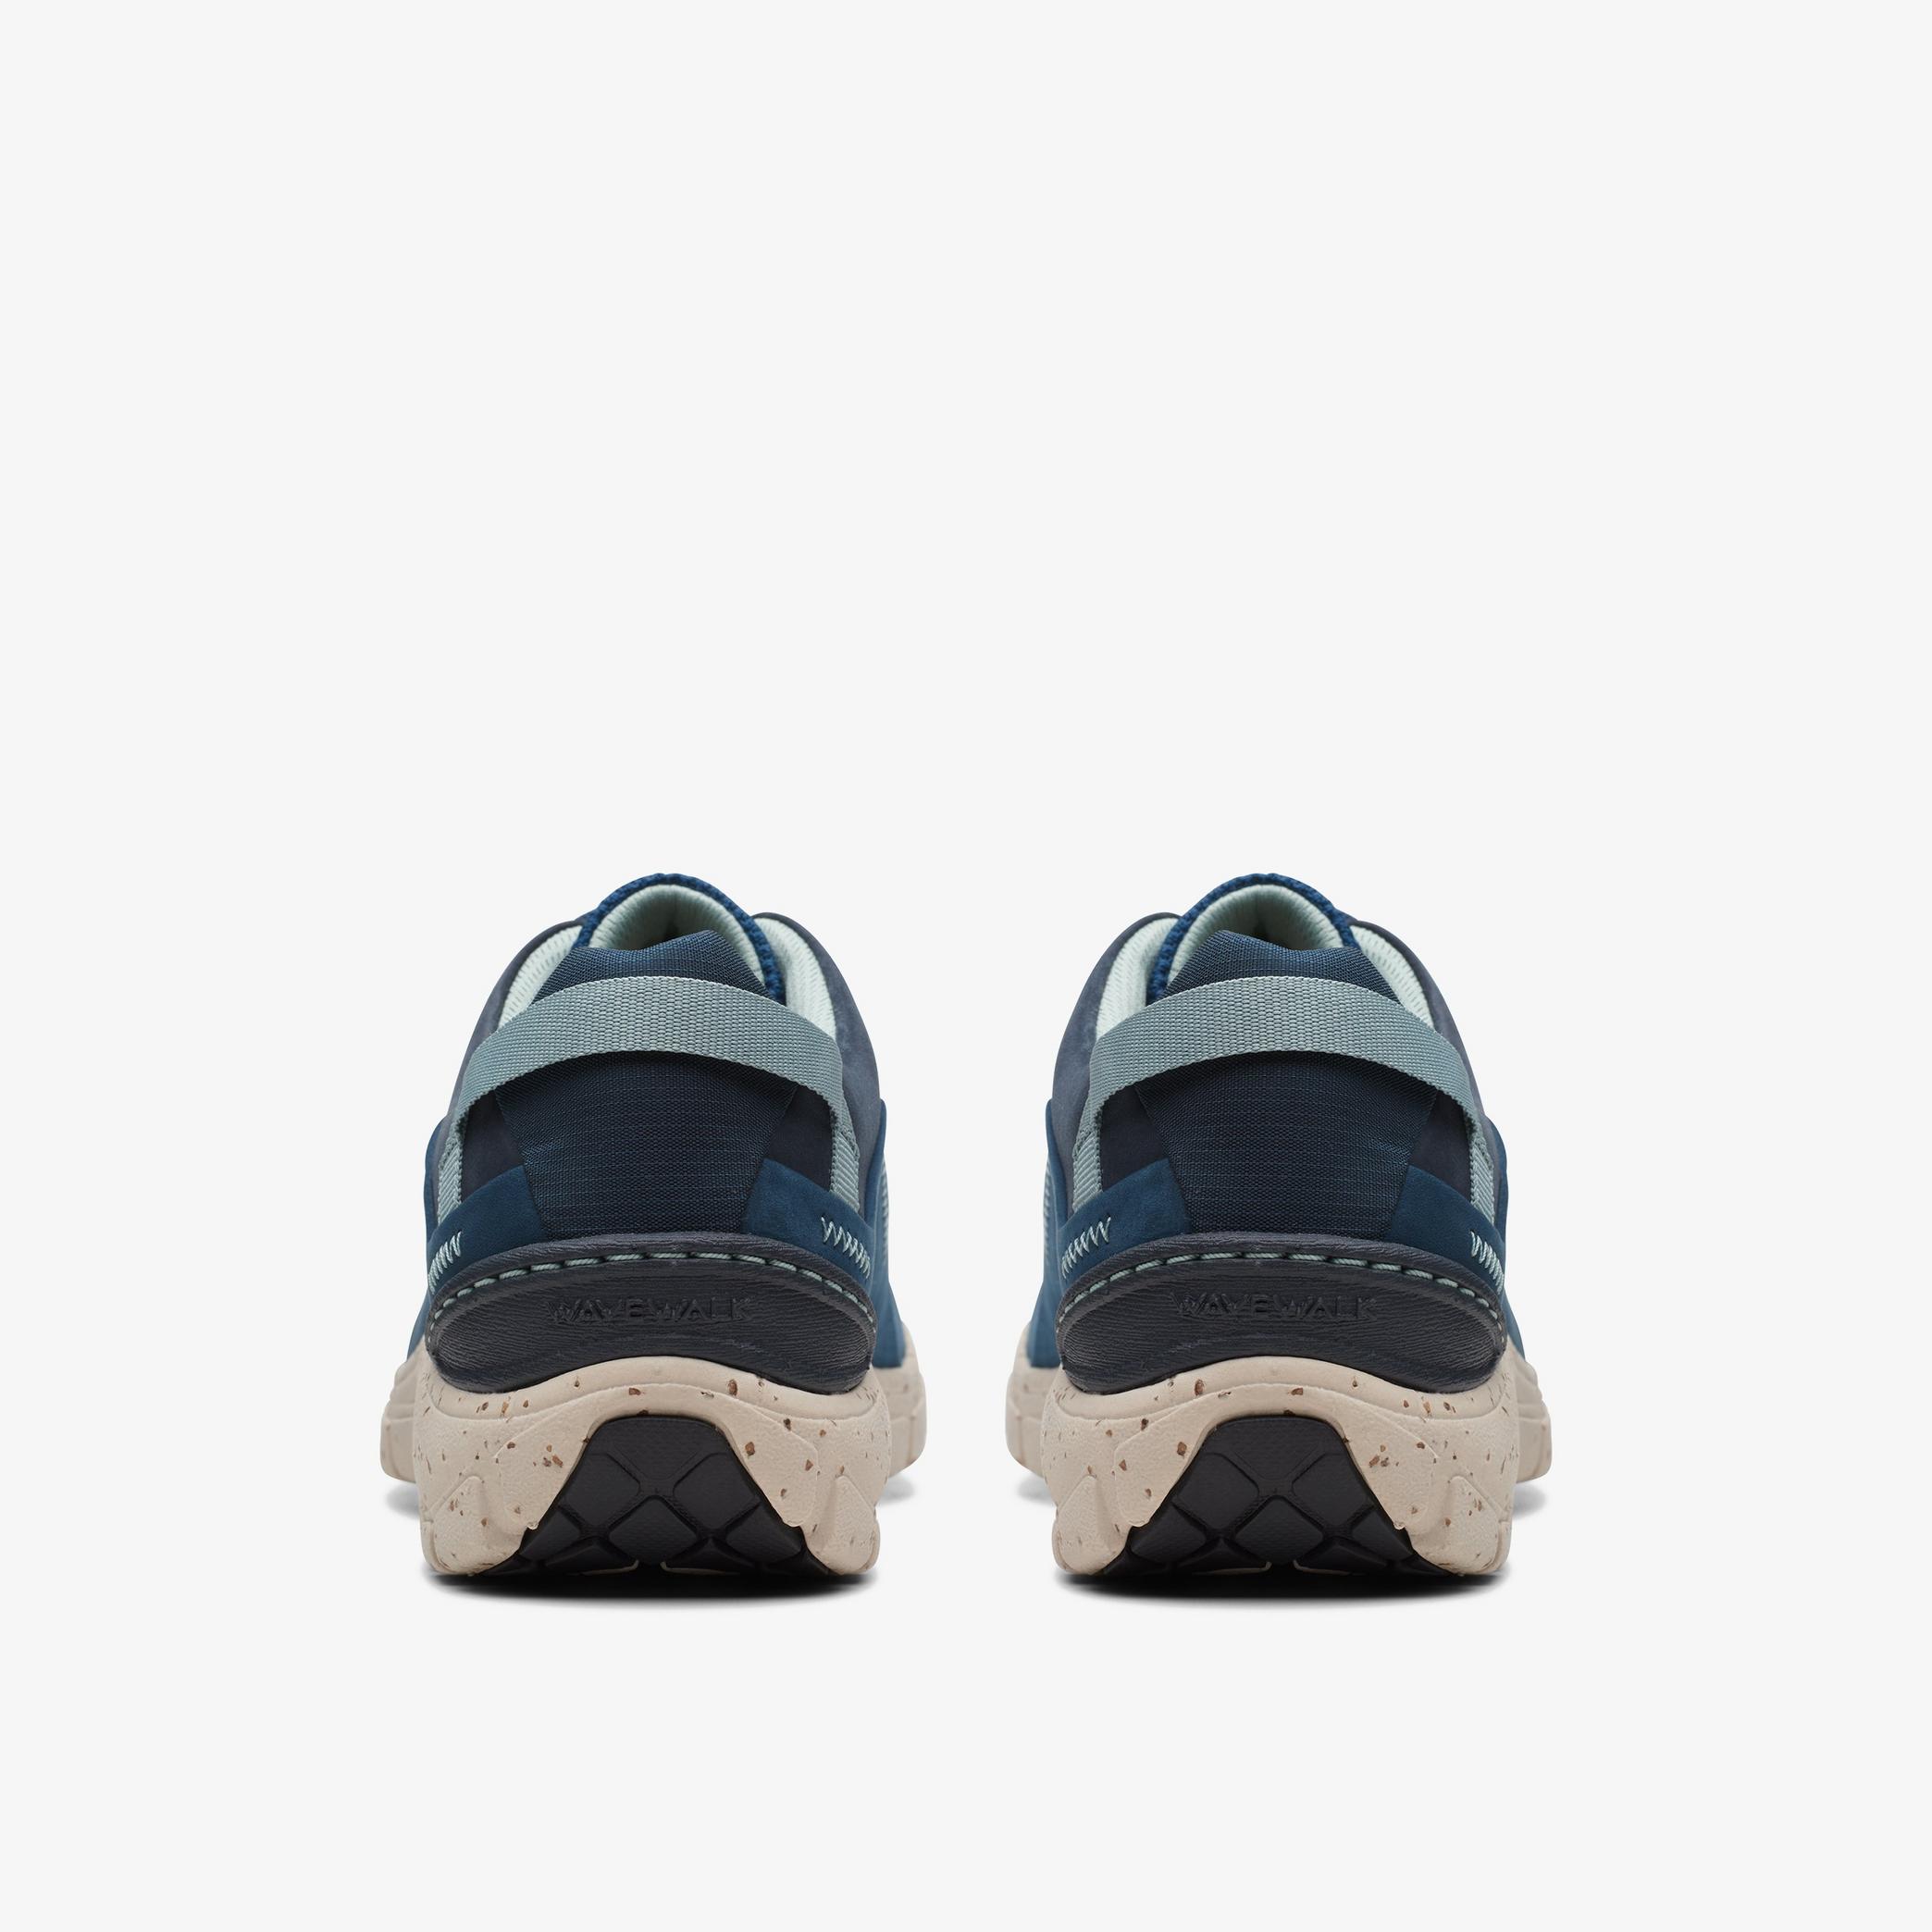 WOMENS Wave Range Blue Combination Sneakers | Clarks US